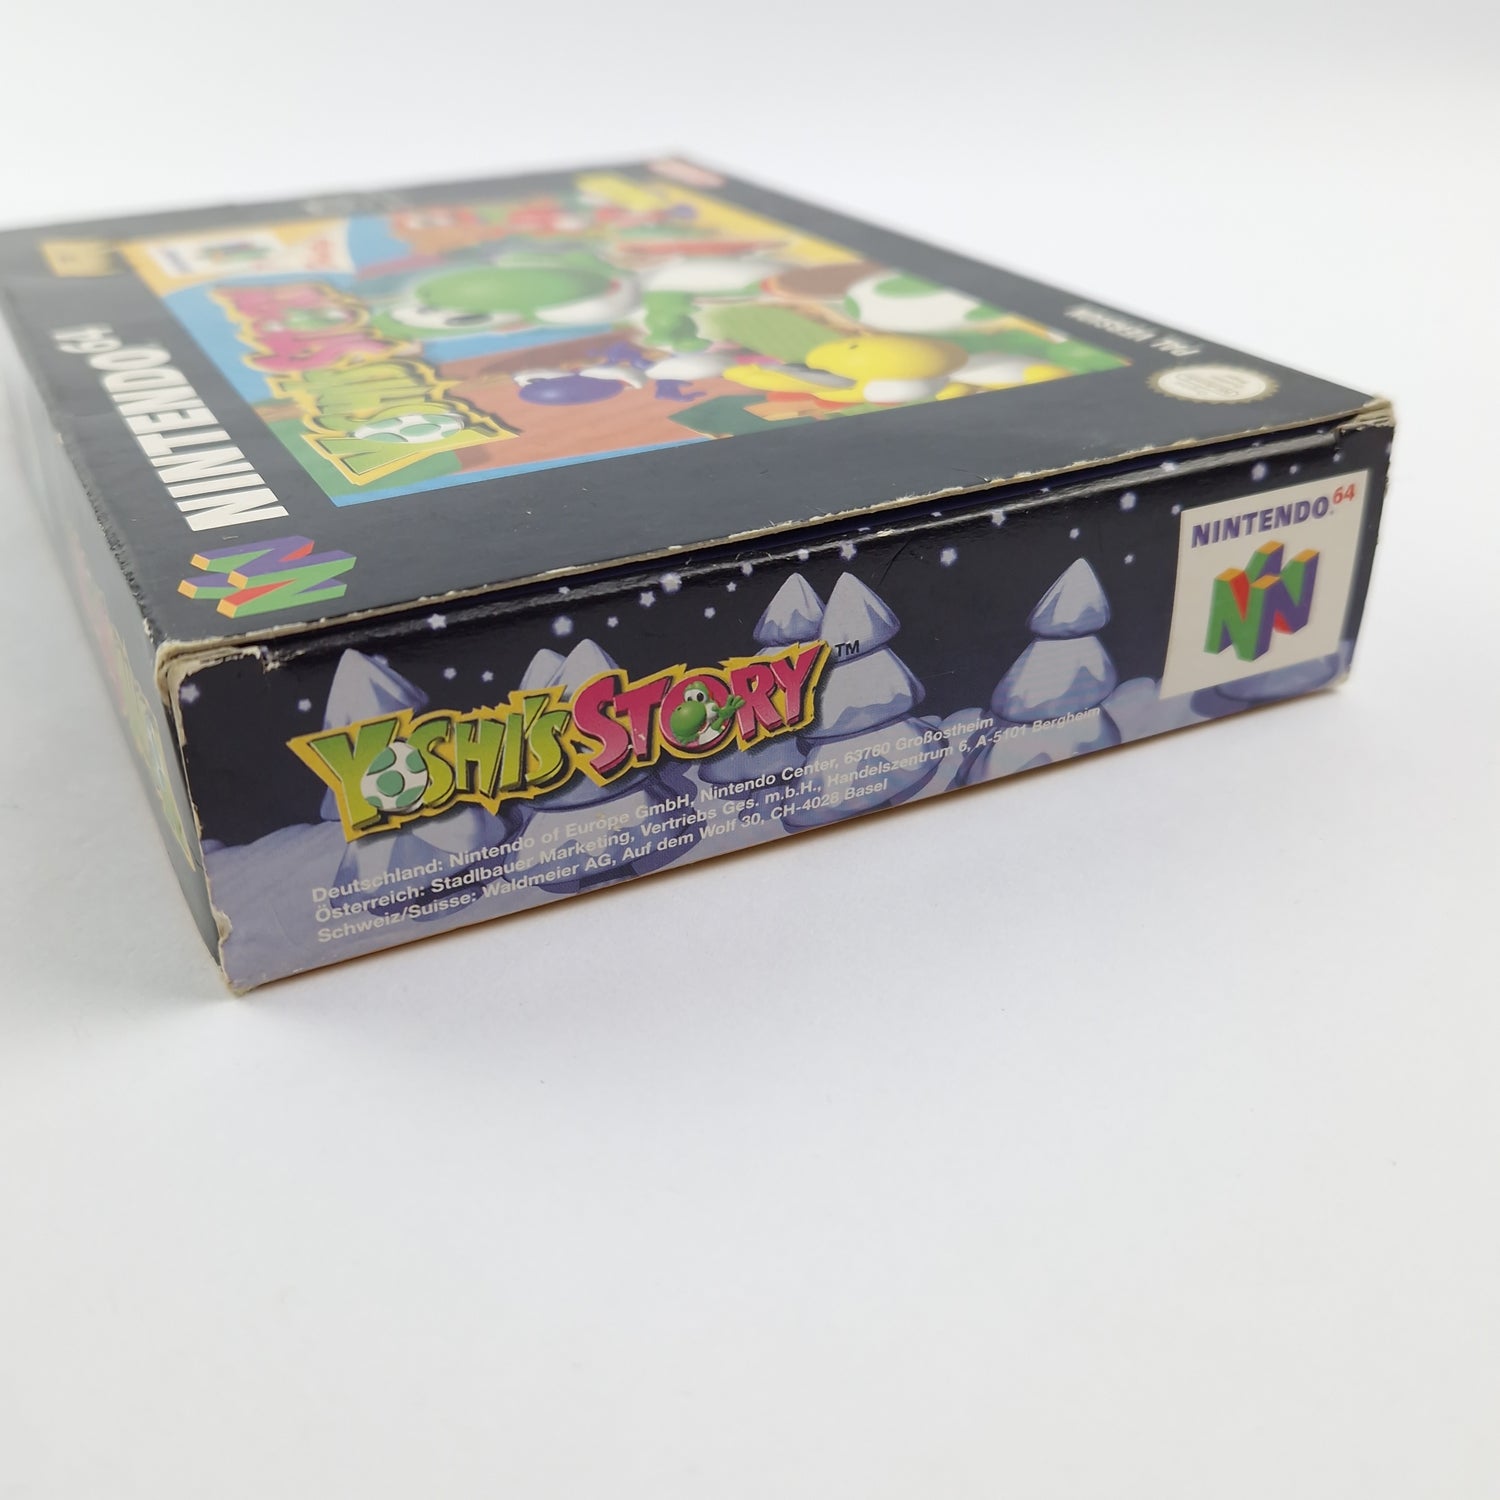 Nintendo 64 Game: Yoshi's Story - Module Instructions OVP / PAL N64 Game